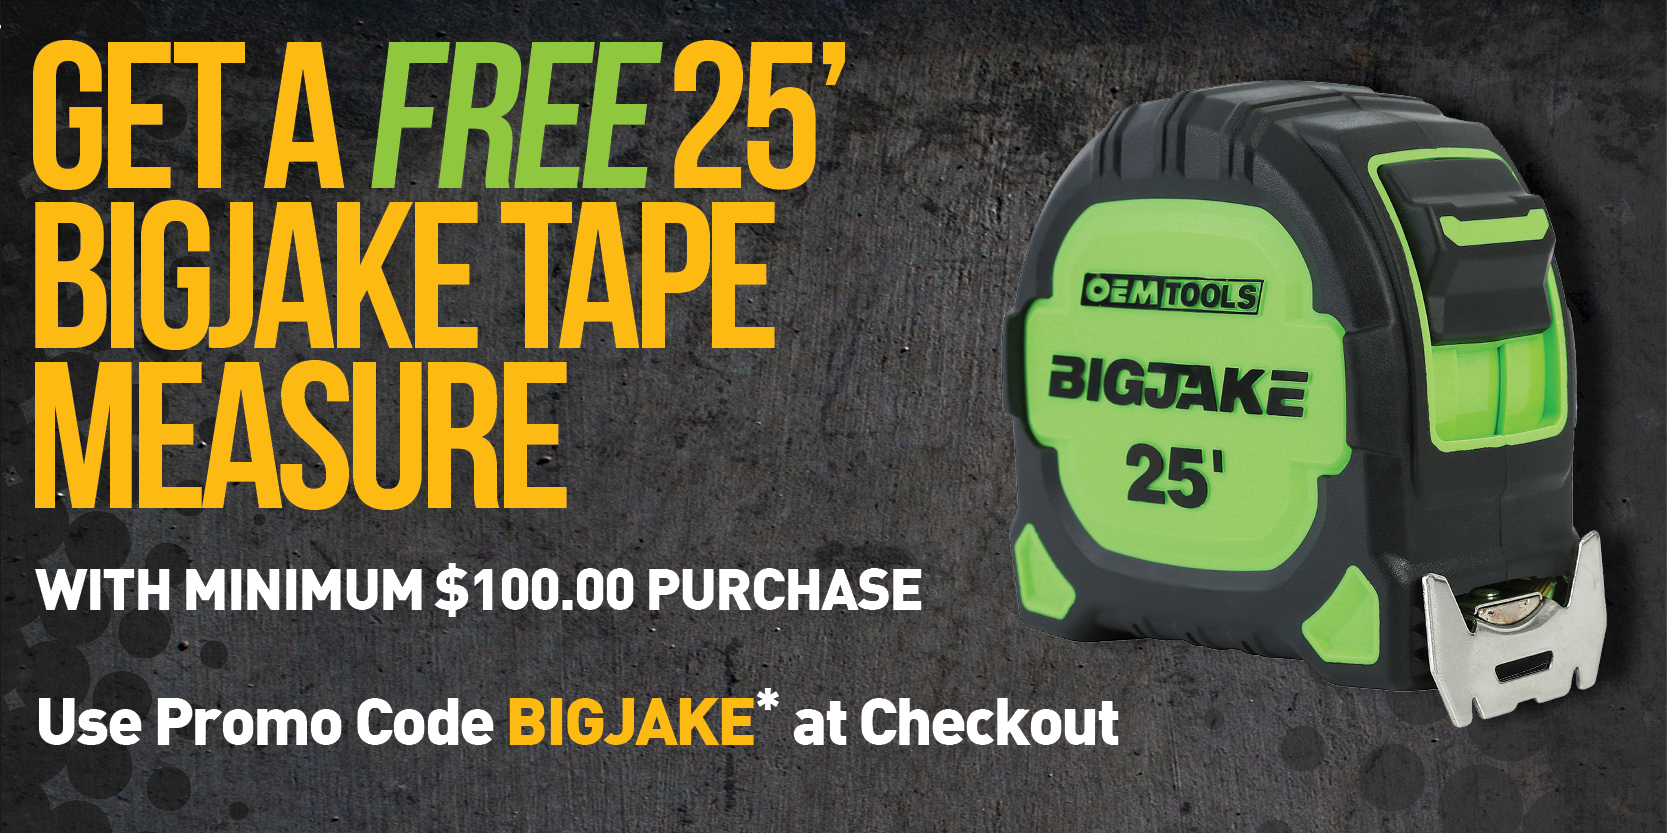 FREE 25' BigJake Tape Measure With Minimum $100 Purchase